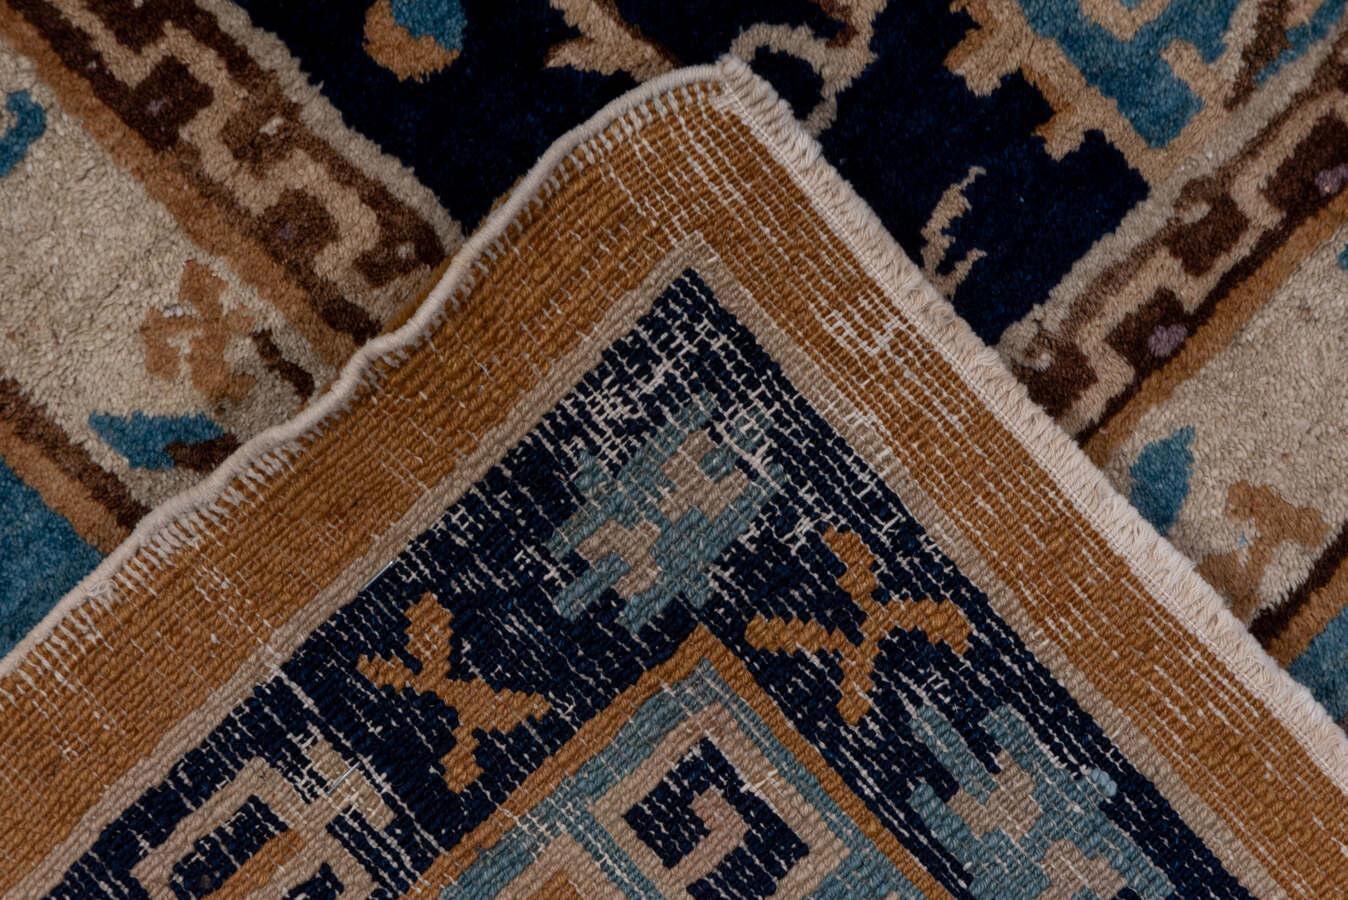 Antique chinese Carpet - # 56812